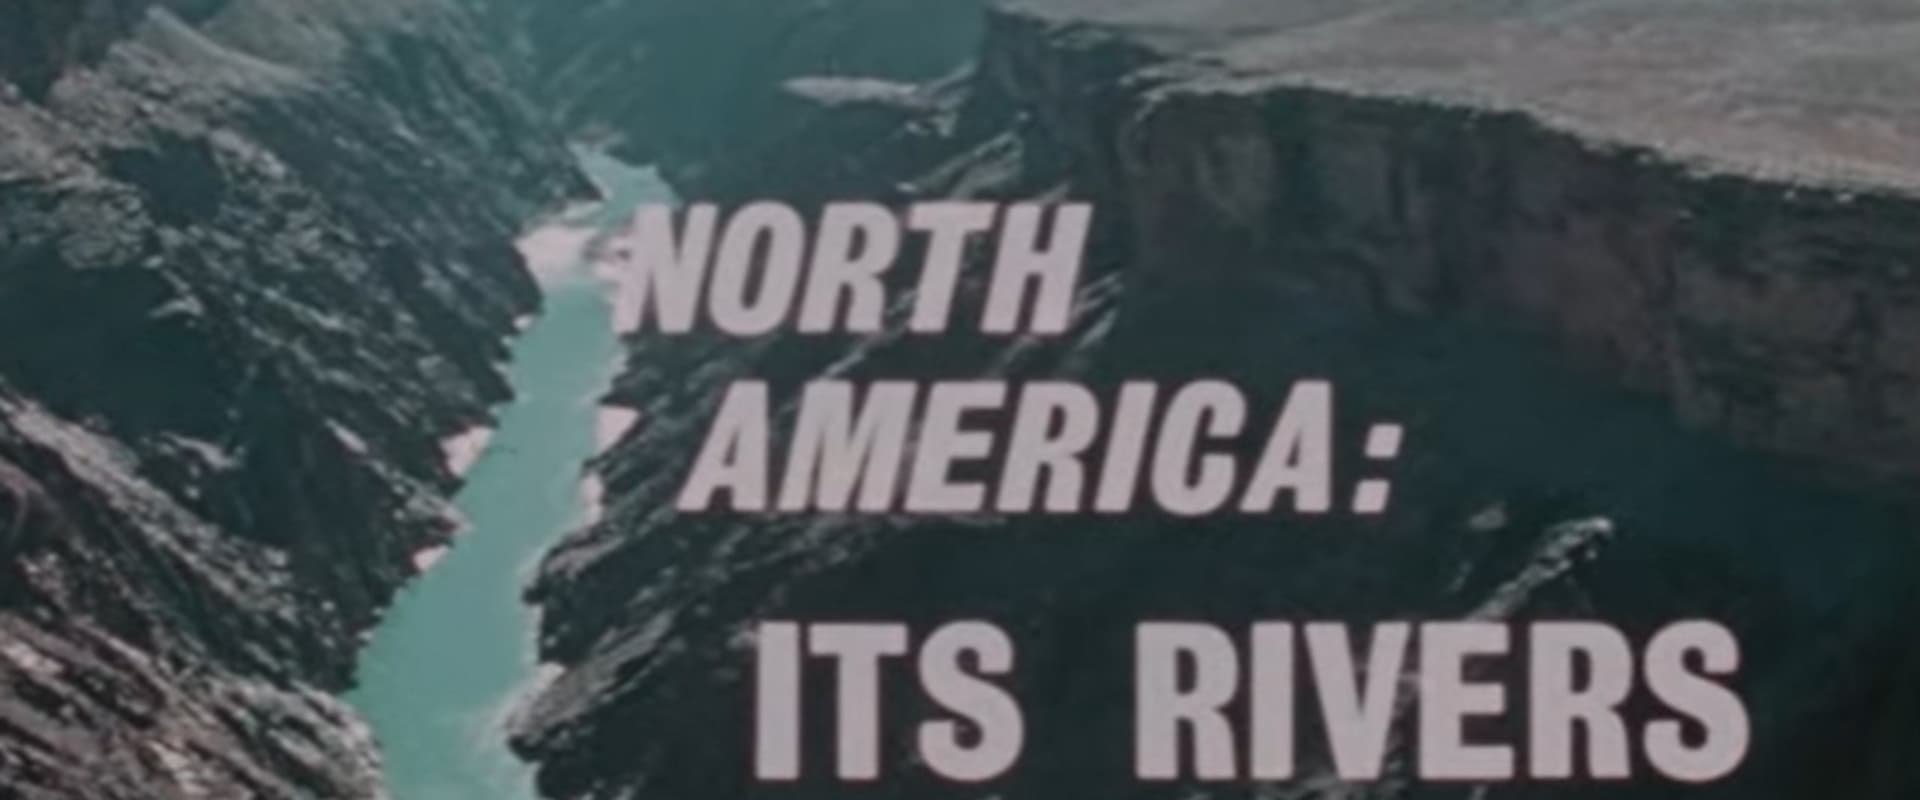 North America: Its Rivers